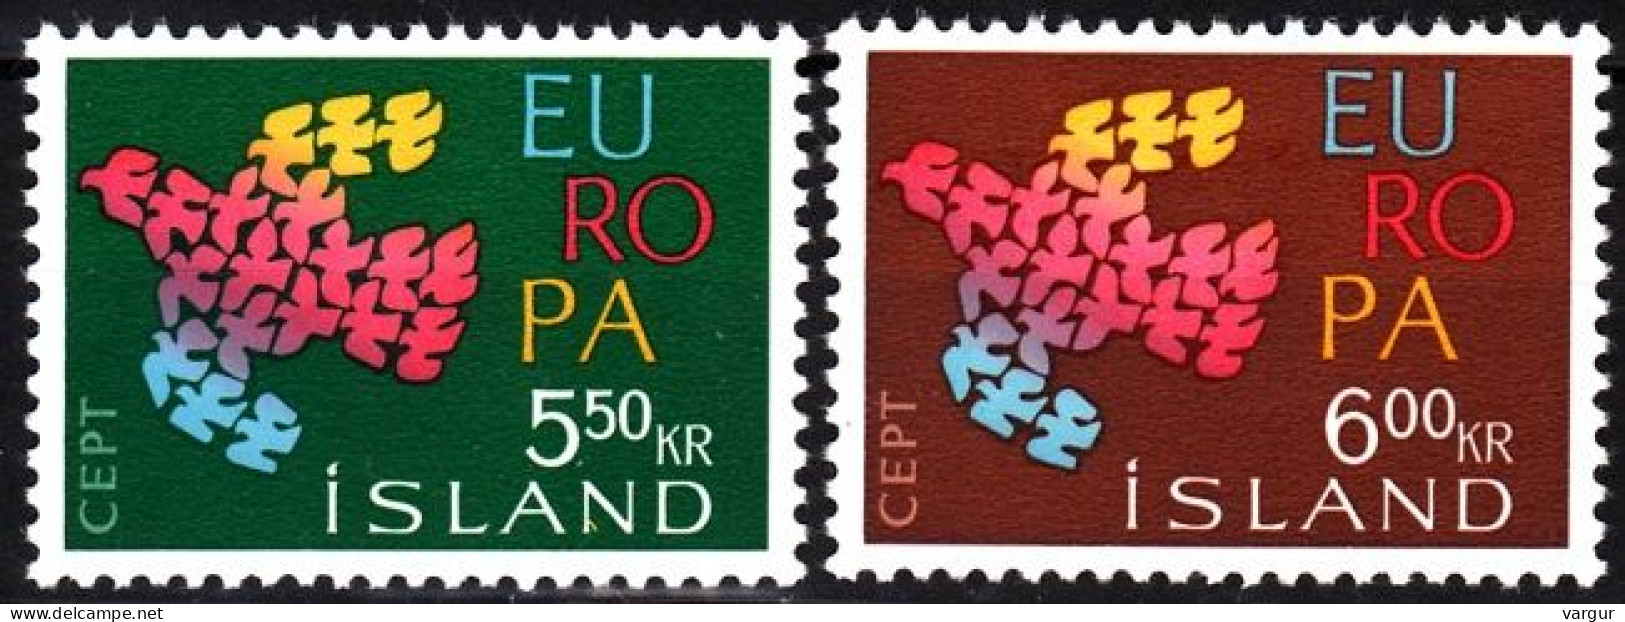 ICELAND / ISLAND 1961 EUROPA. Complete Set, MNH - 1961